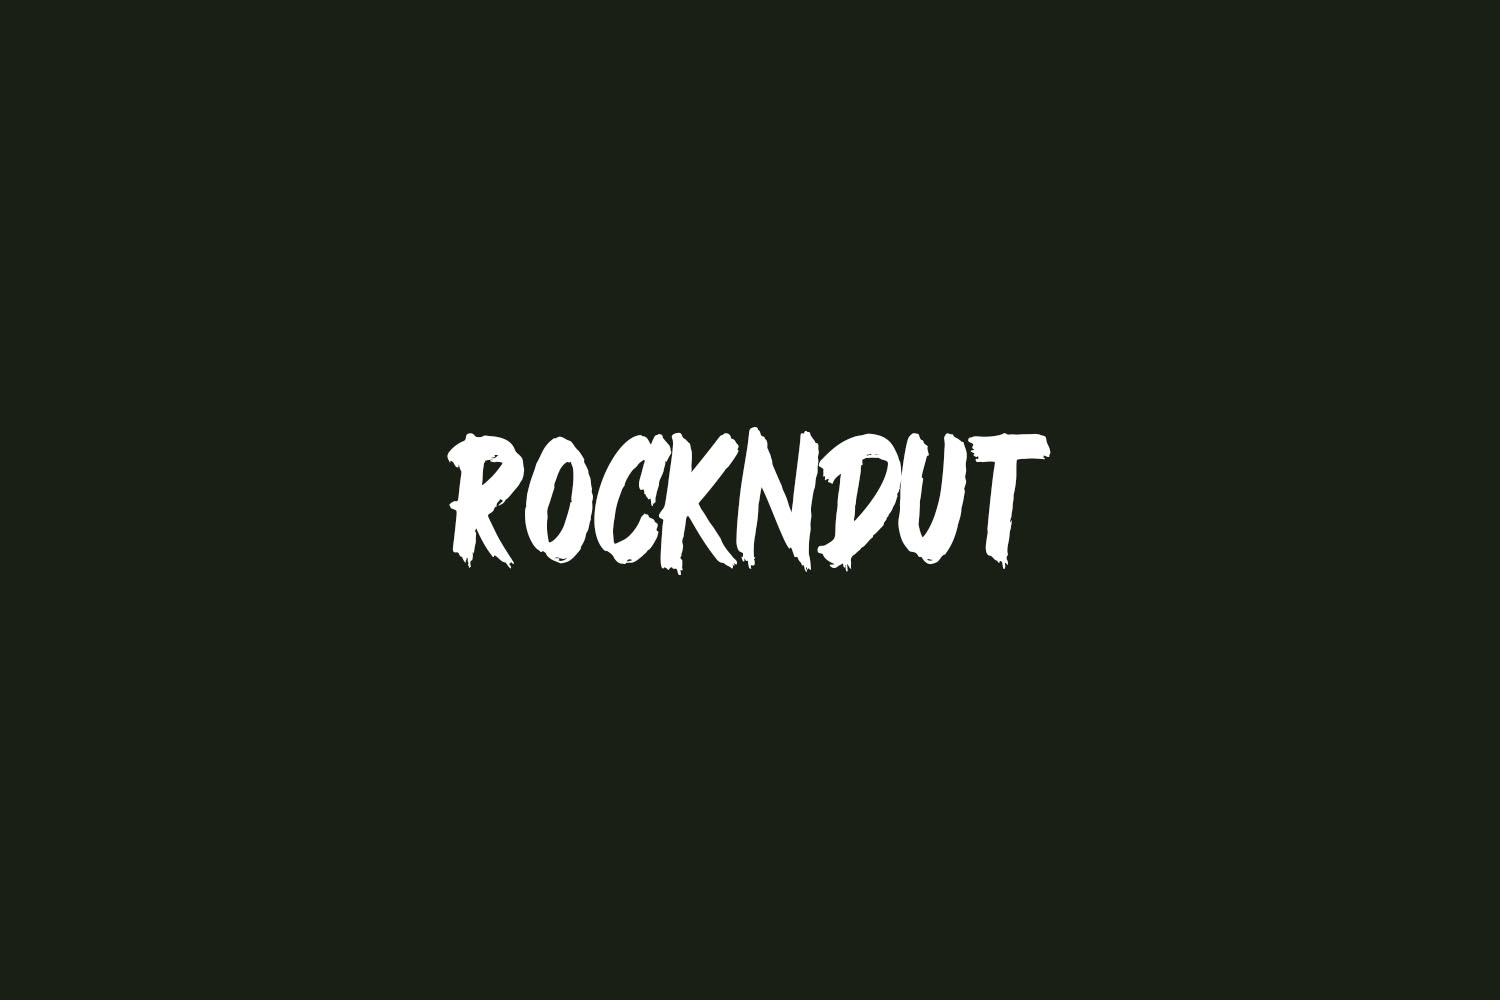 Rockndut Free Font